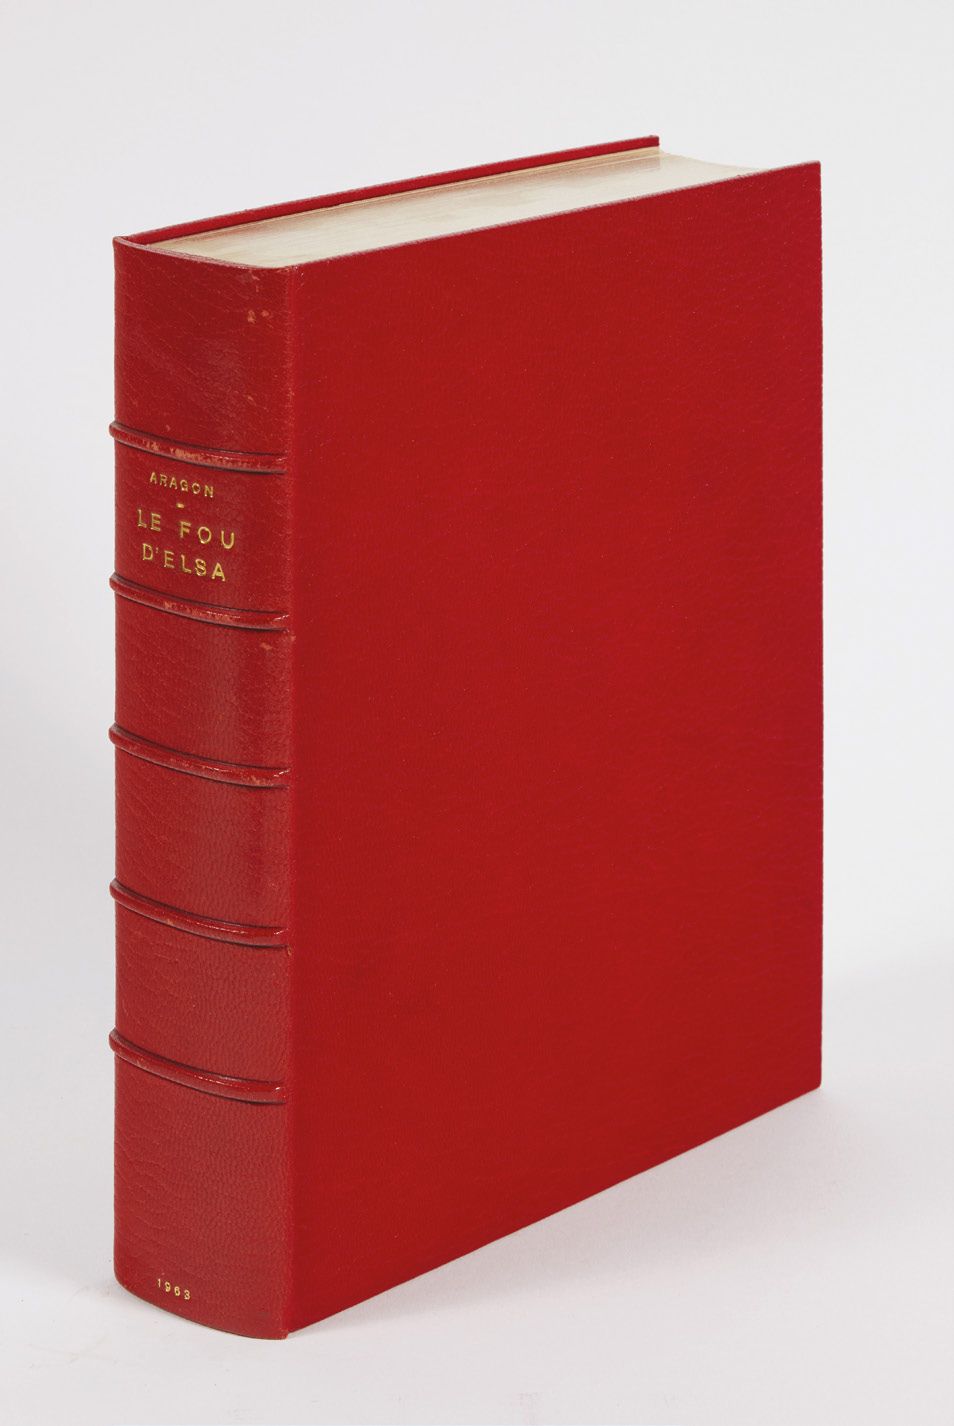 ARAGON, Louis. Le Fou d'Elsa, 诗歌。巴黎，Gallimard，1963年；小四开，红色詹森主义摩洛哥，木质封面和封底，书脊上有五个&hellip;